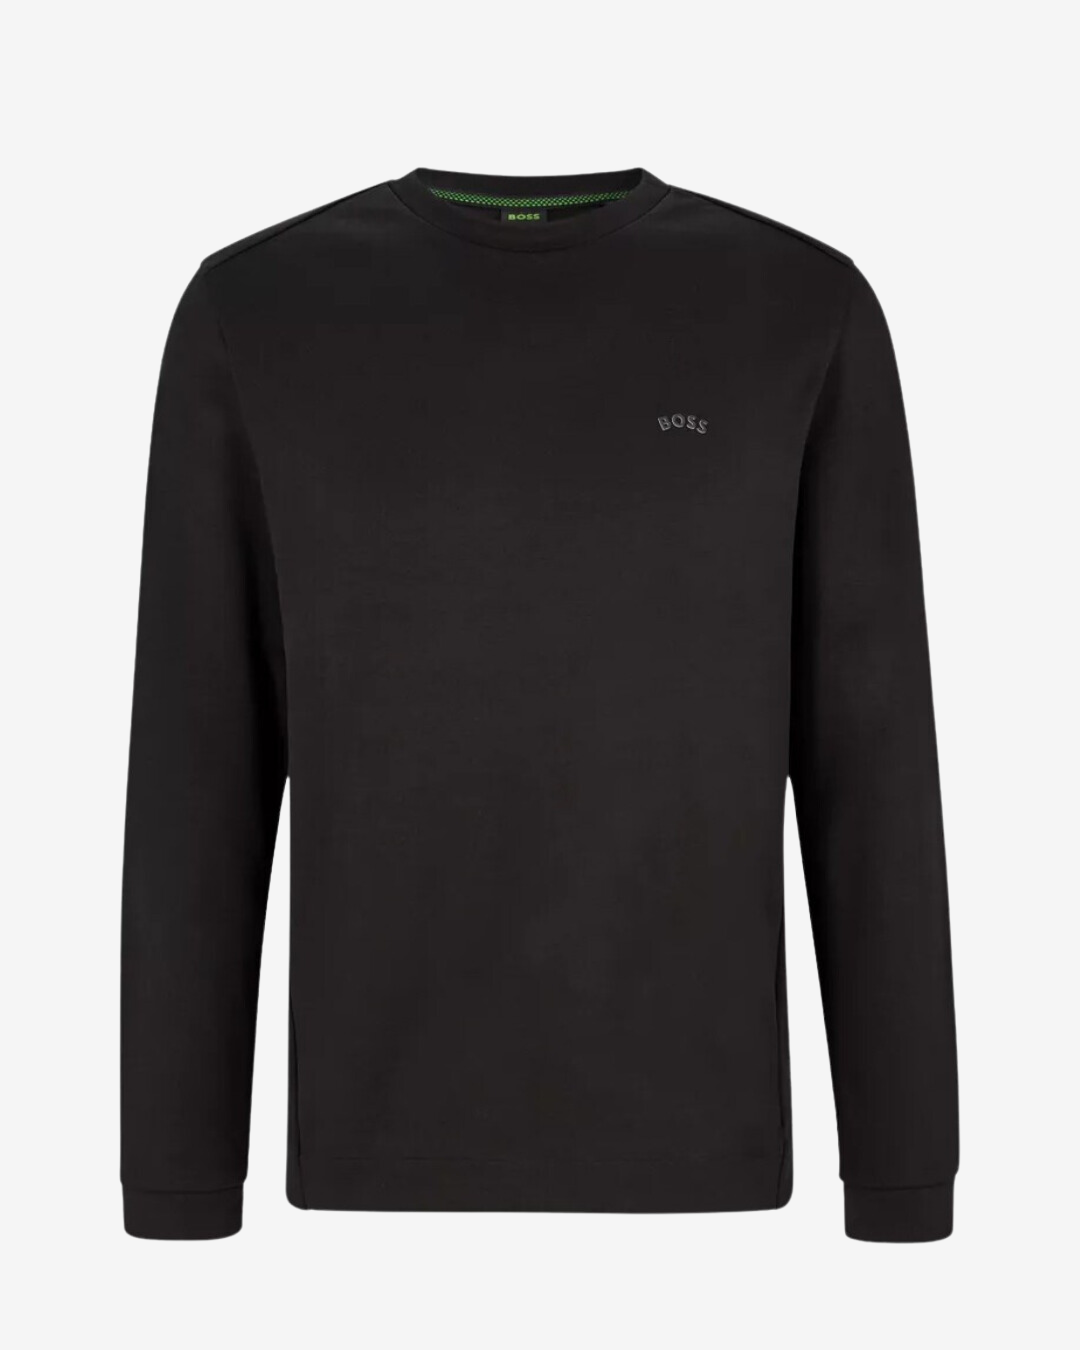 Se Hugo Boss Salbo sweatshirt - Sort - Str. XL - Modish.dk hos Modish.dk